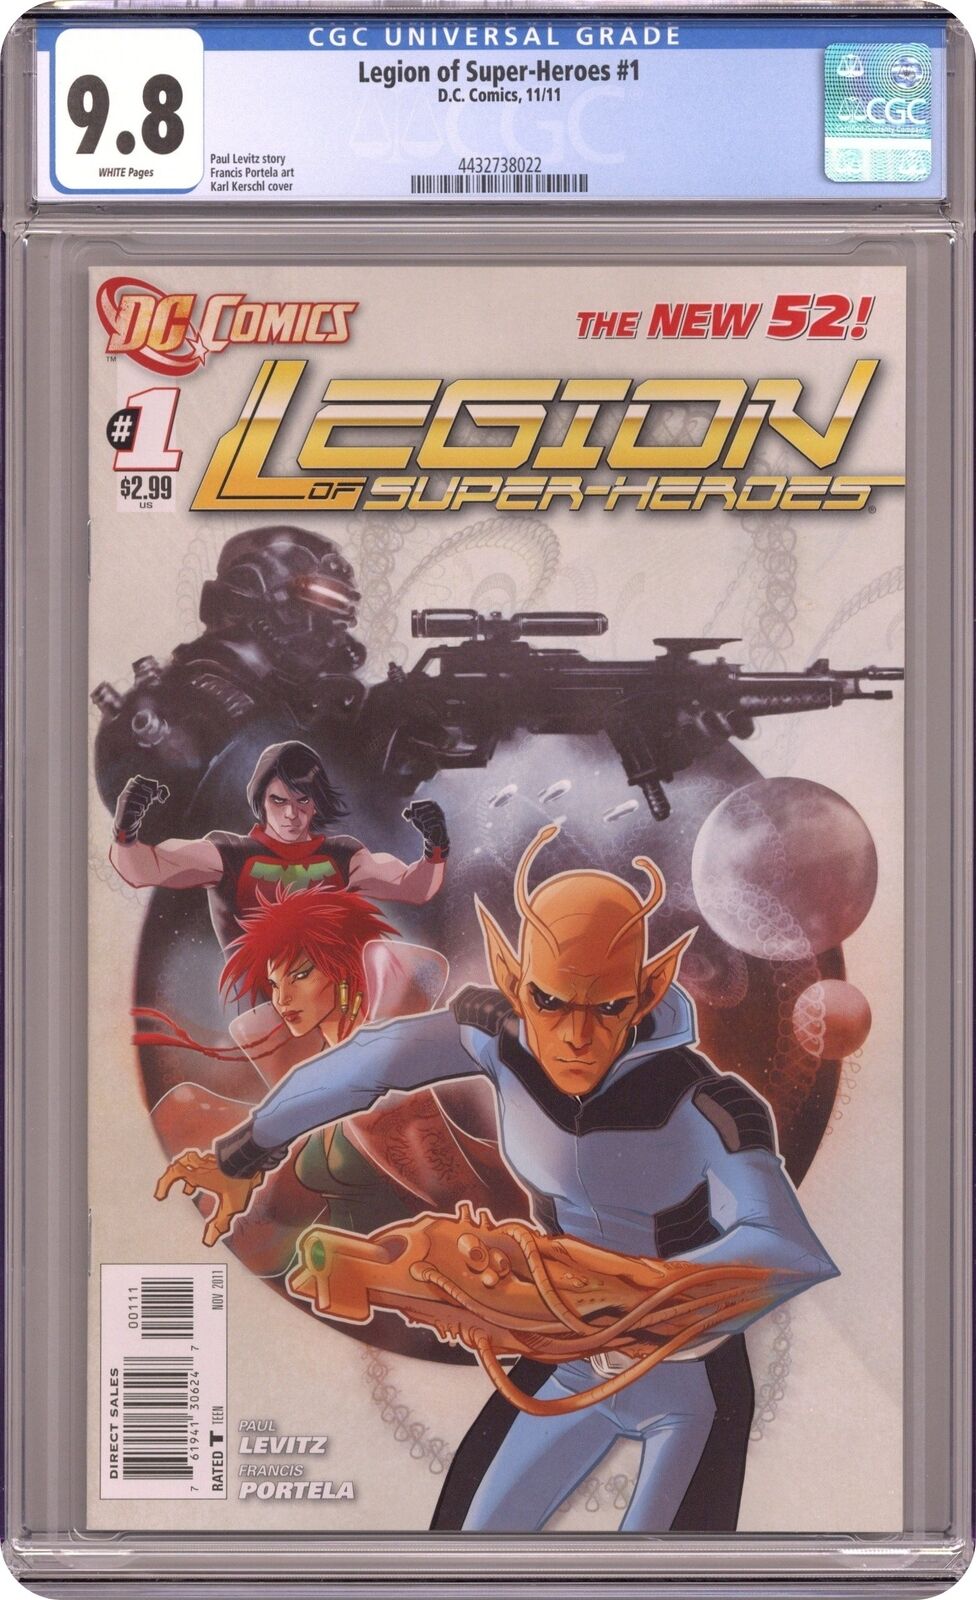 Legion of Super-Heroes 1A CGC 9.8 2011 4432738022